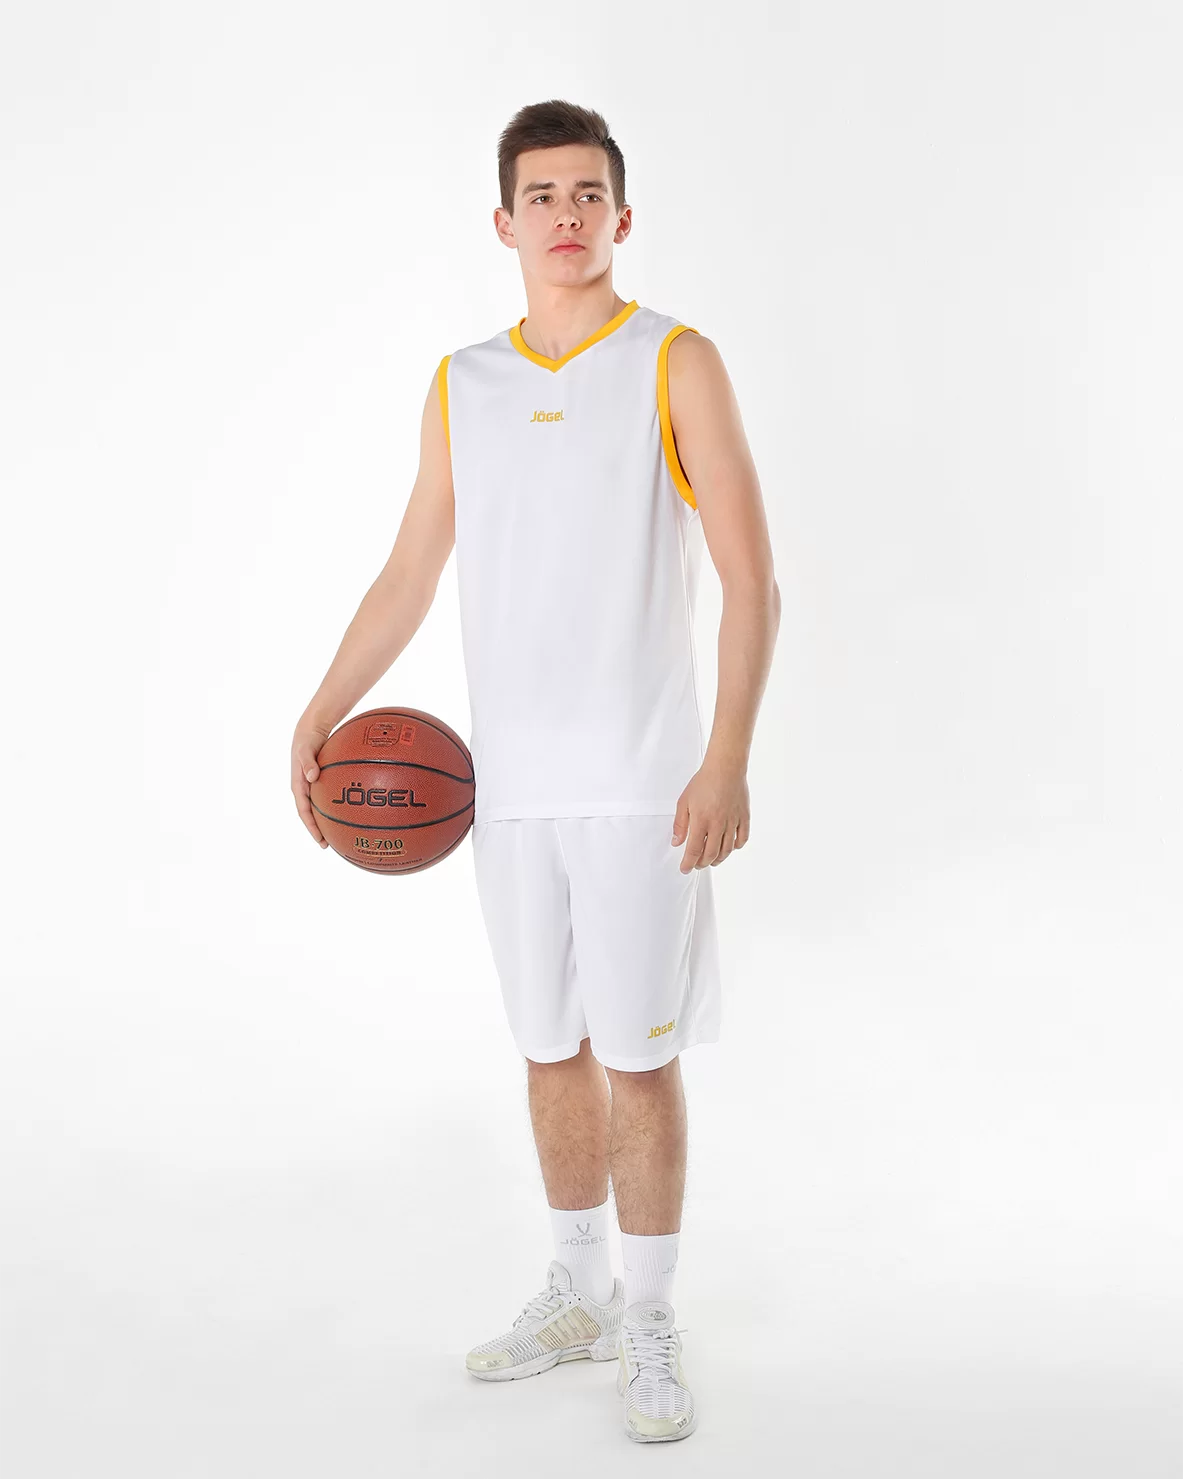 Фото Майка баскетбольная JBT-1020-014, белый/желтый со склада магазина СпортСЕ